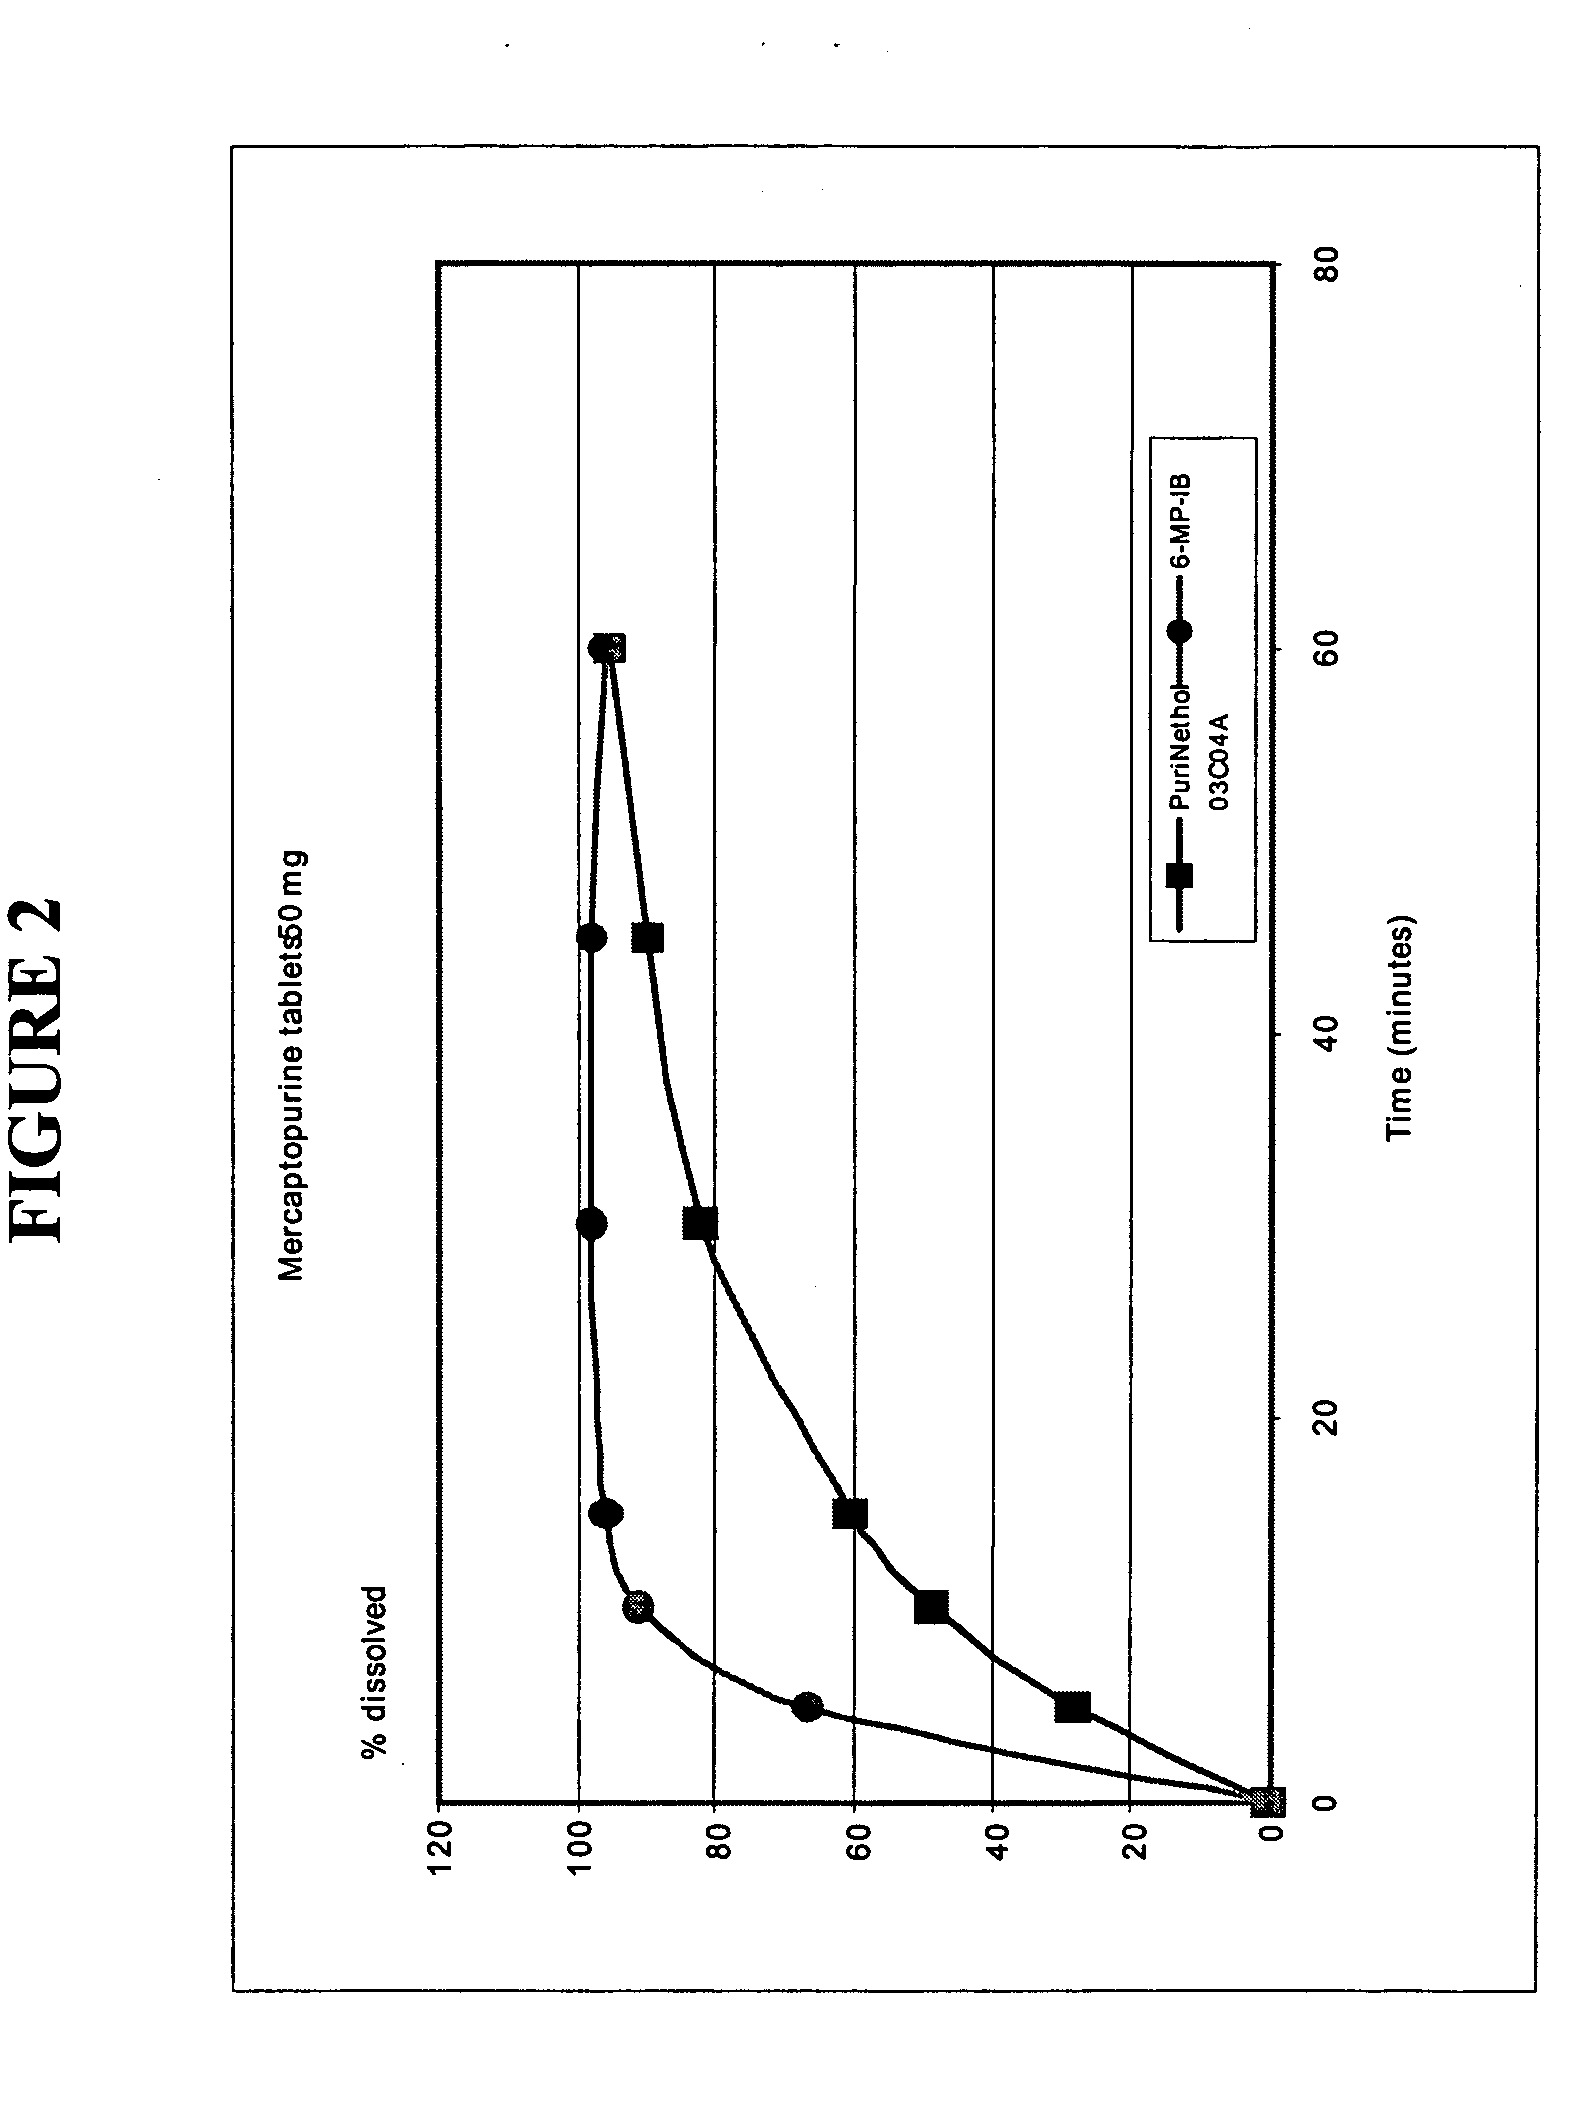 Formulations of 6-mercaptopurine